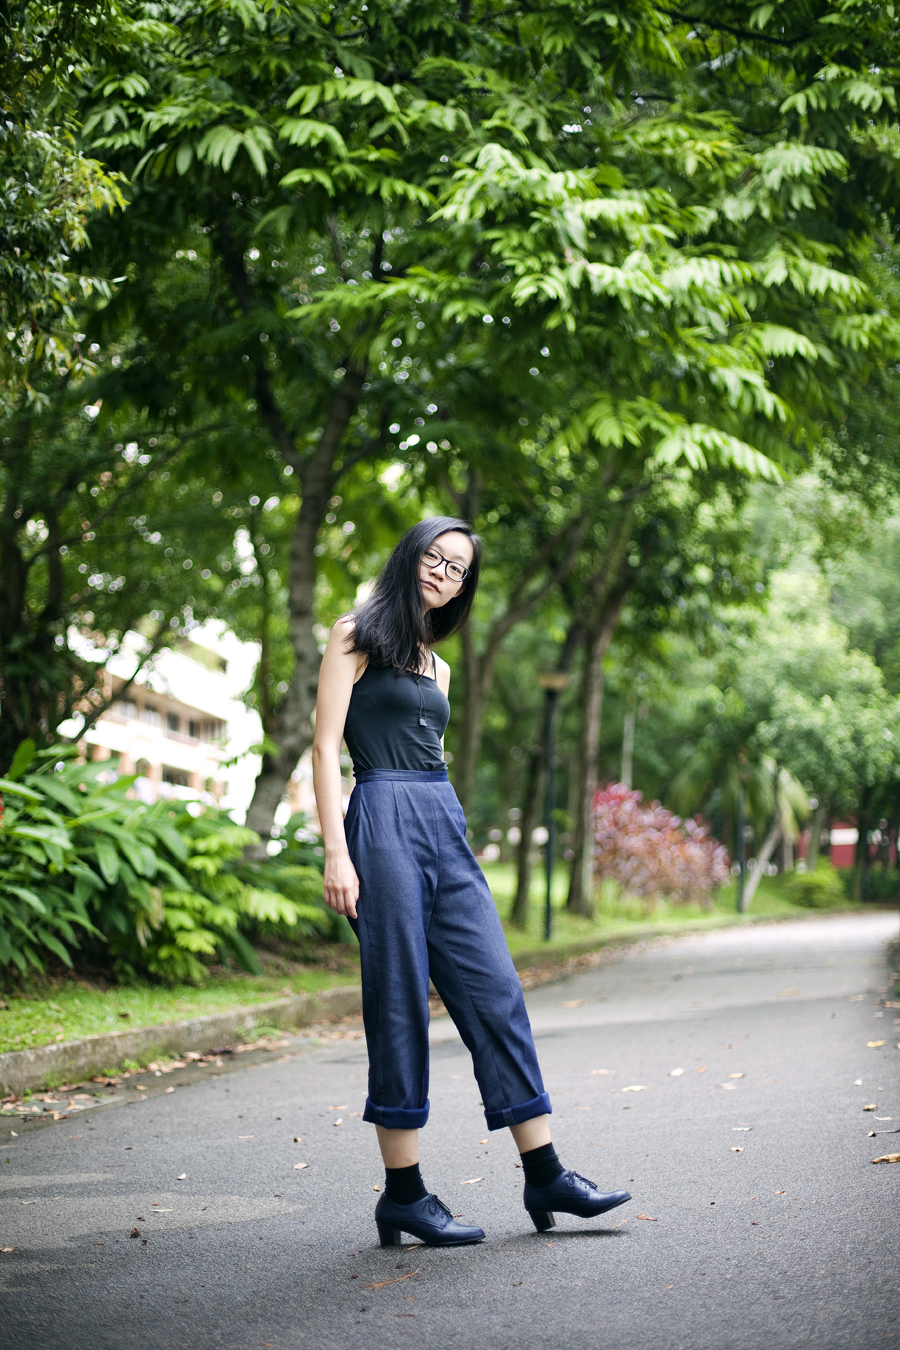 Outfit of the day (#ootd): Uniqlo black bratop, vintage navy pants, Taobao black socks, Taobao navy oxford heels, Gap black rim glasses, black square pendant necklace from Bangkok.